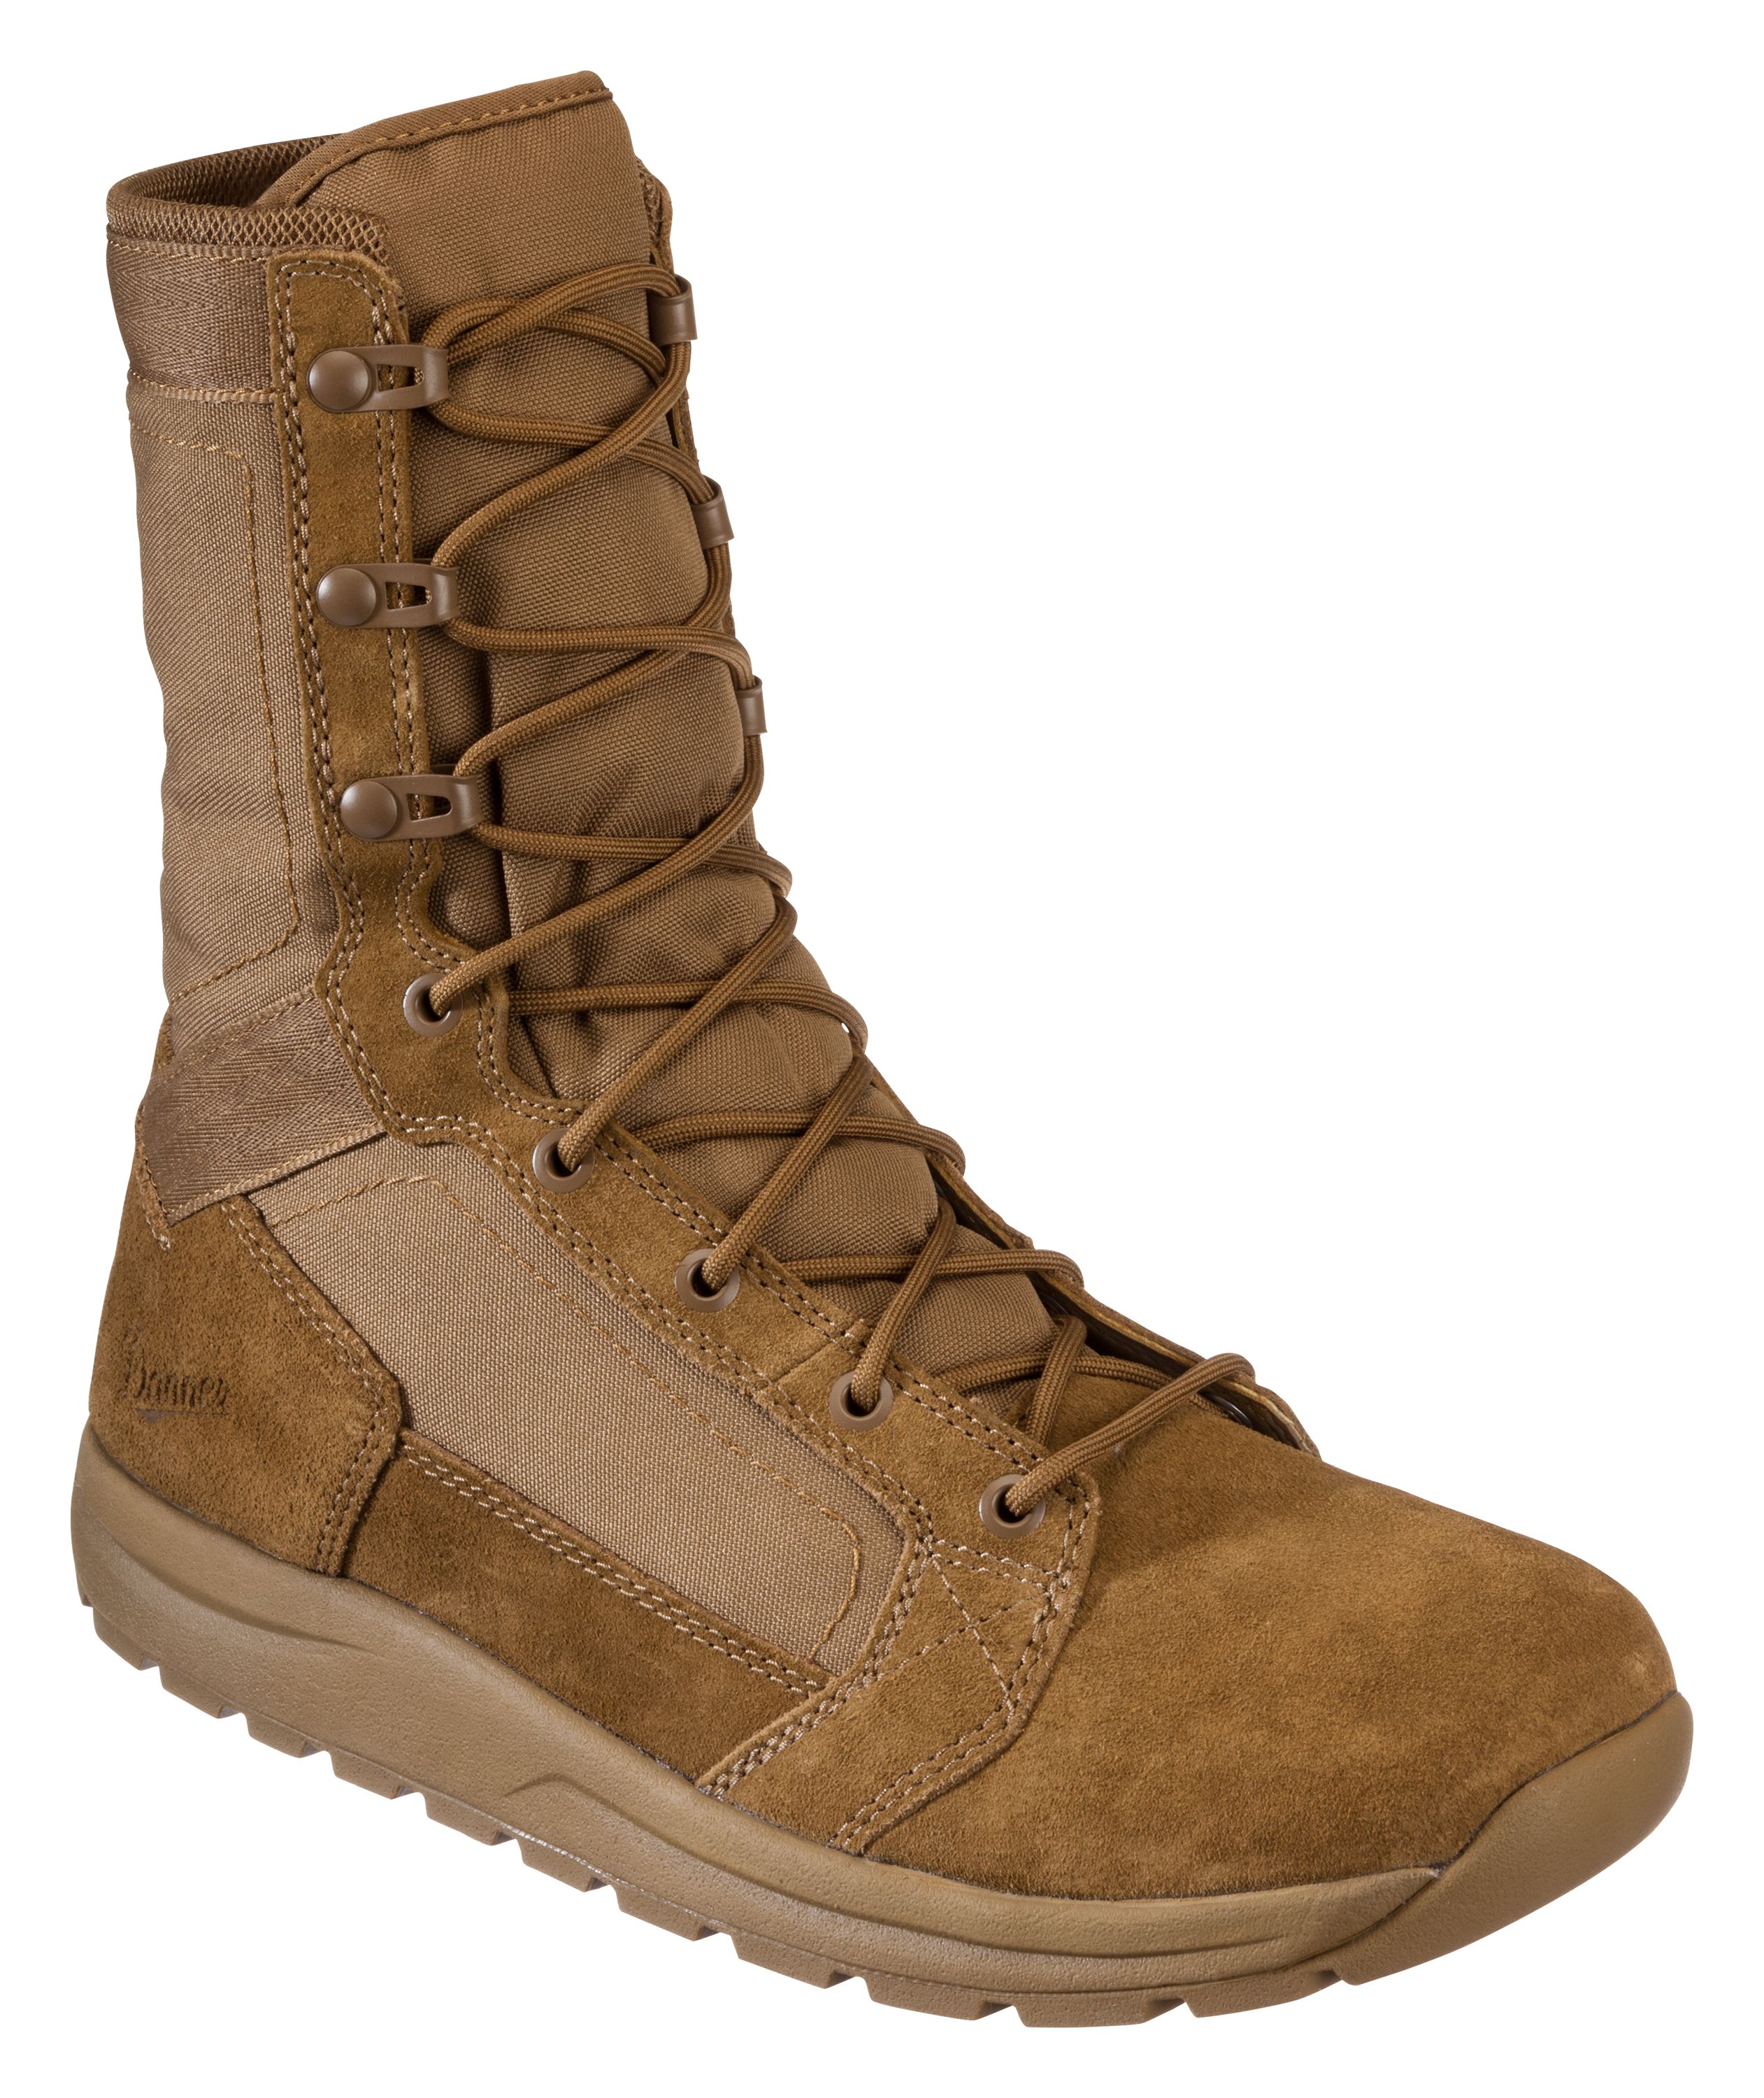 Danner Tachyon Tactical Boots for Men - Coyote - 15W